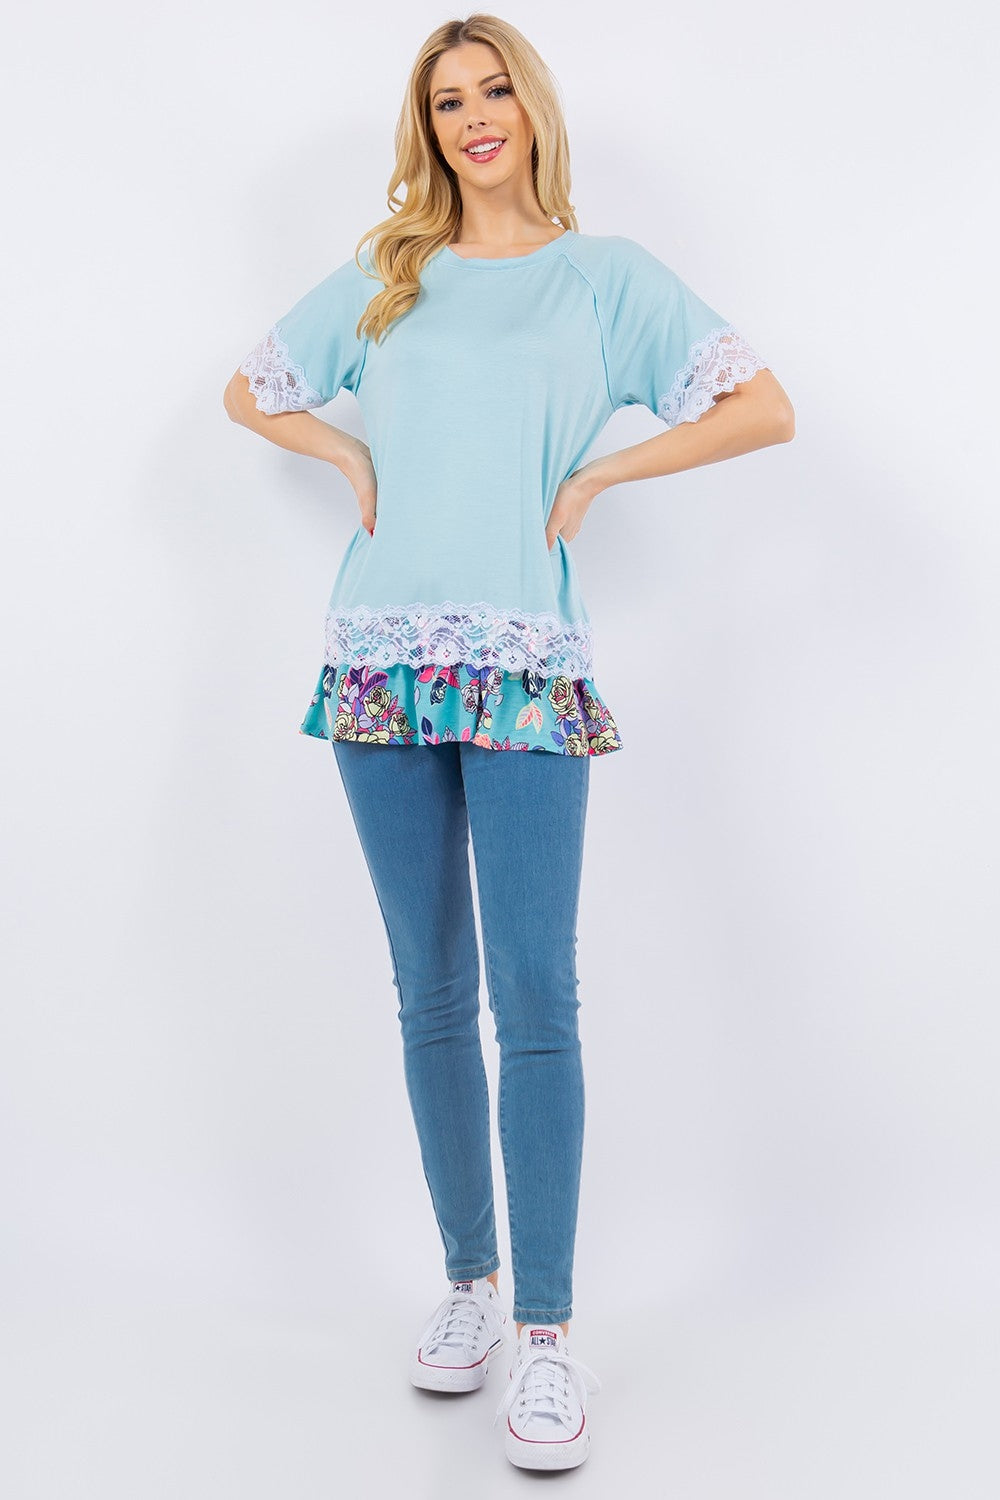 Celeste Full Size Lace Trim Short Sleeve Top - Tigbuls Variety Fashion